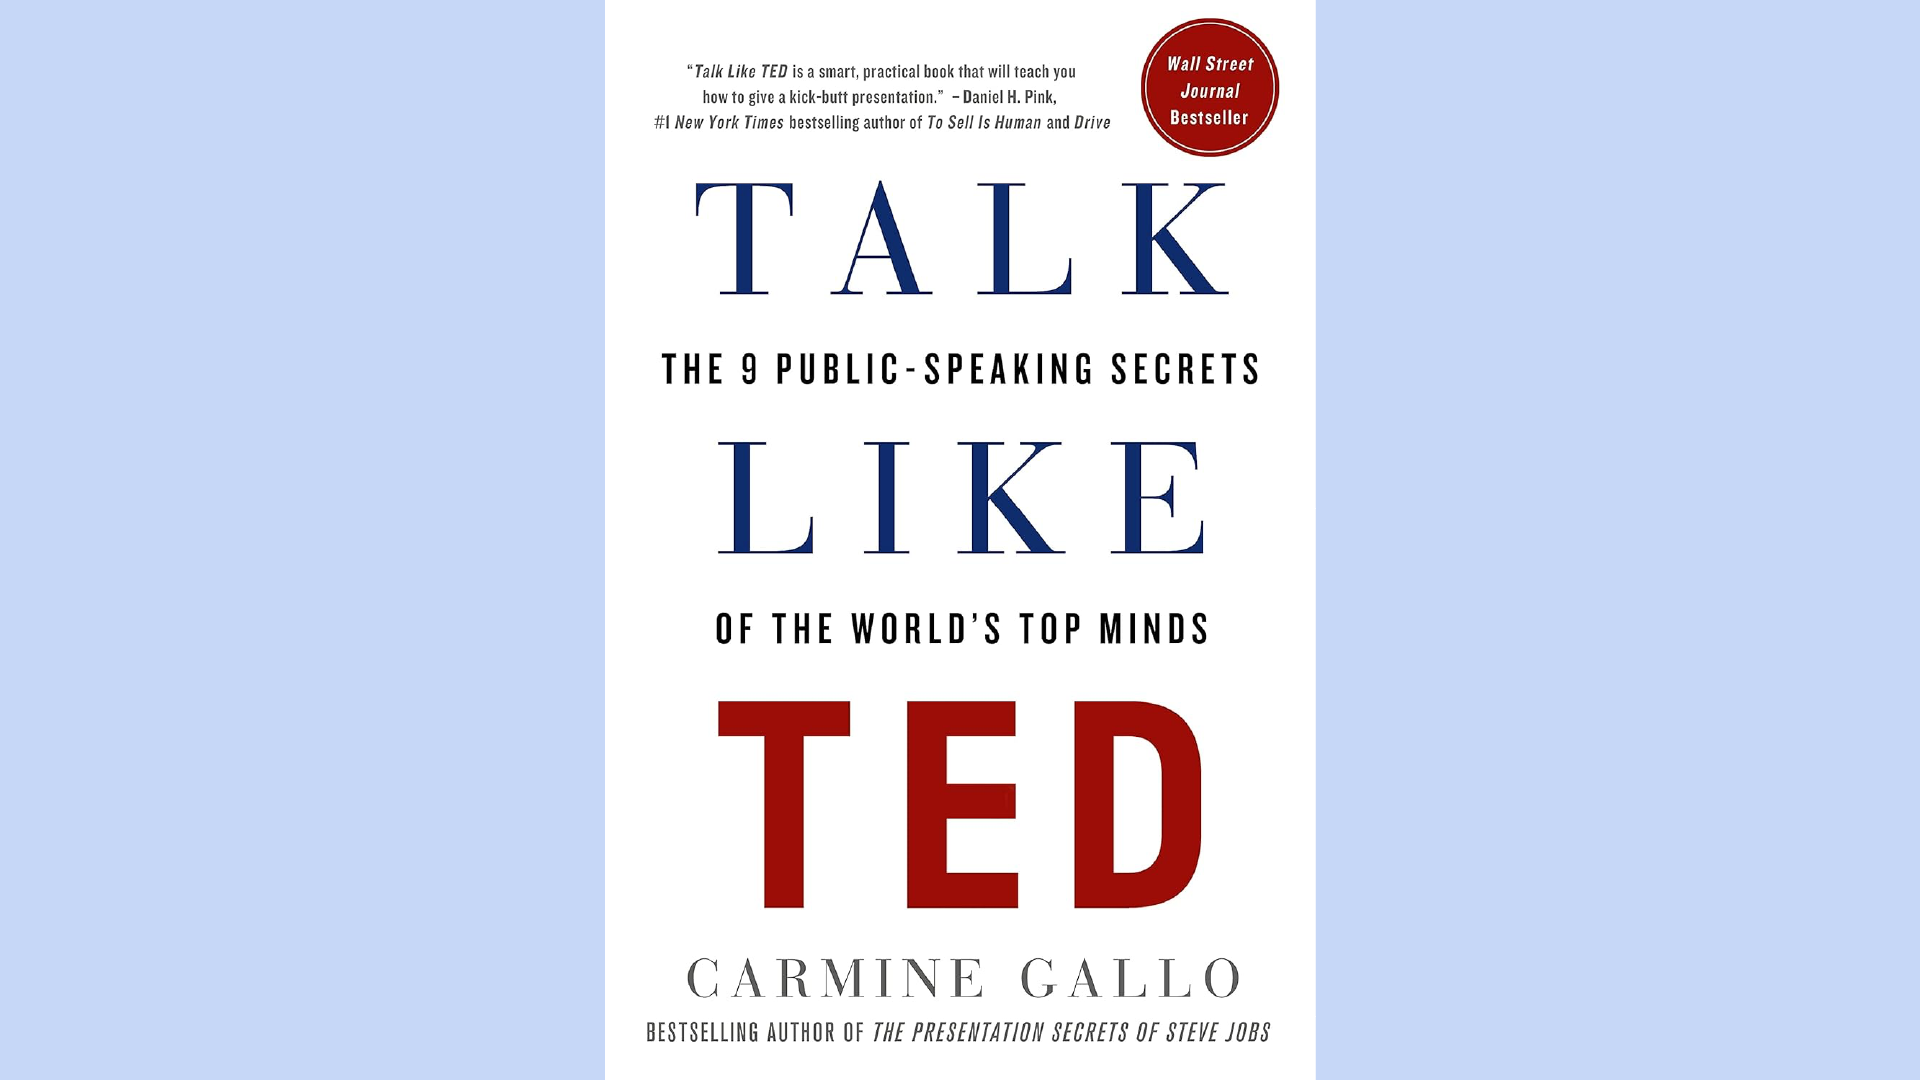 Summary: Talk Like Ted by Carmine Gallo